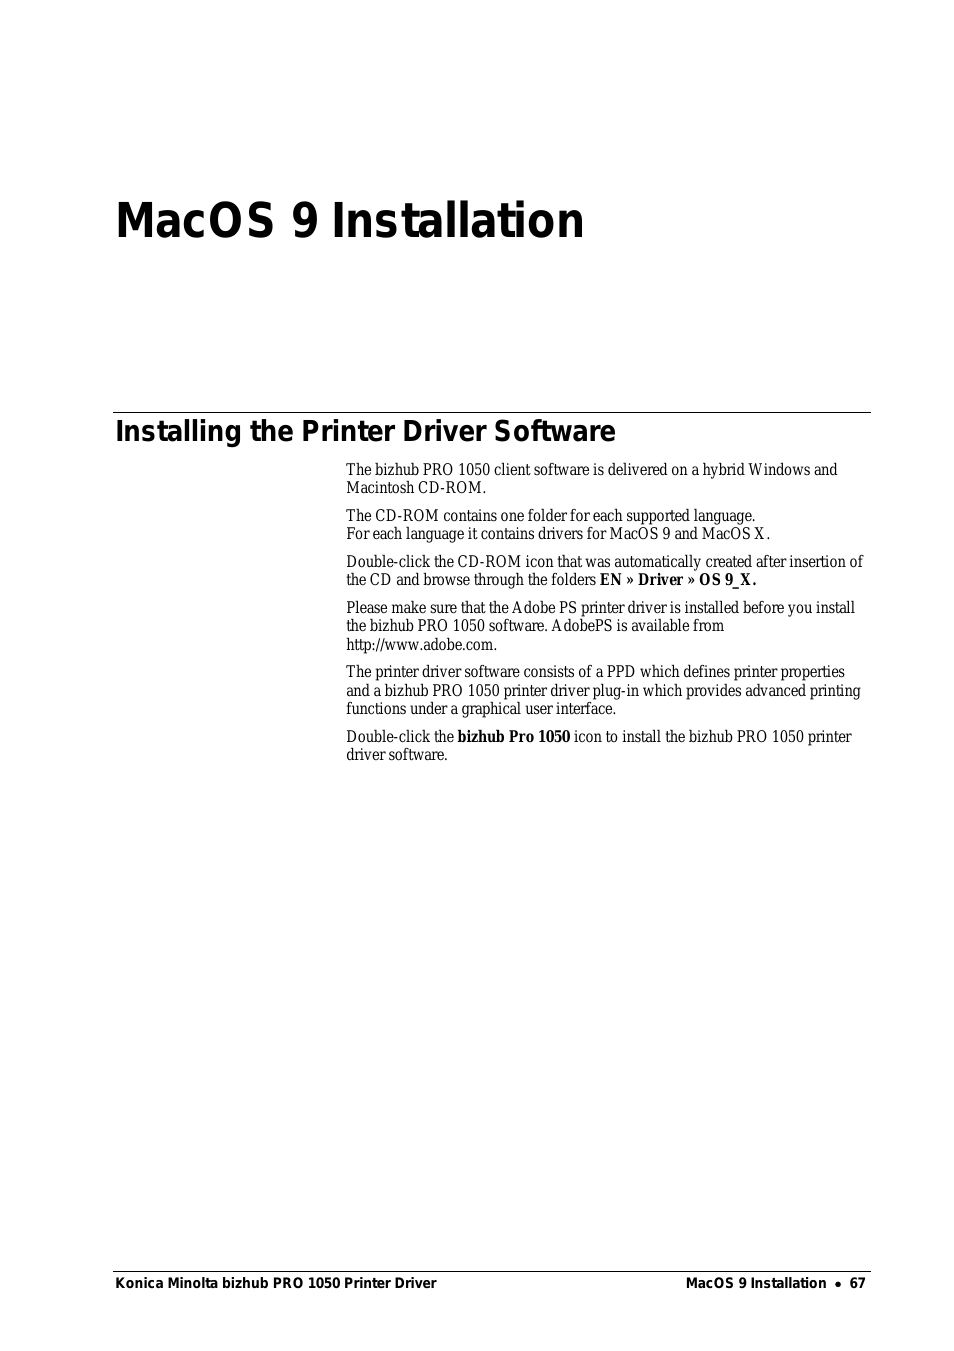 konica minolta printer driver for mac